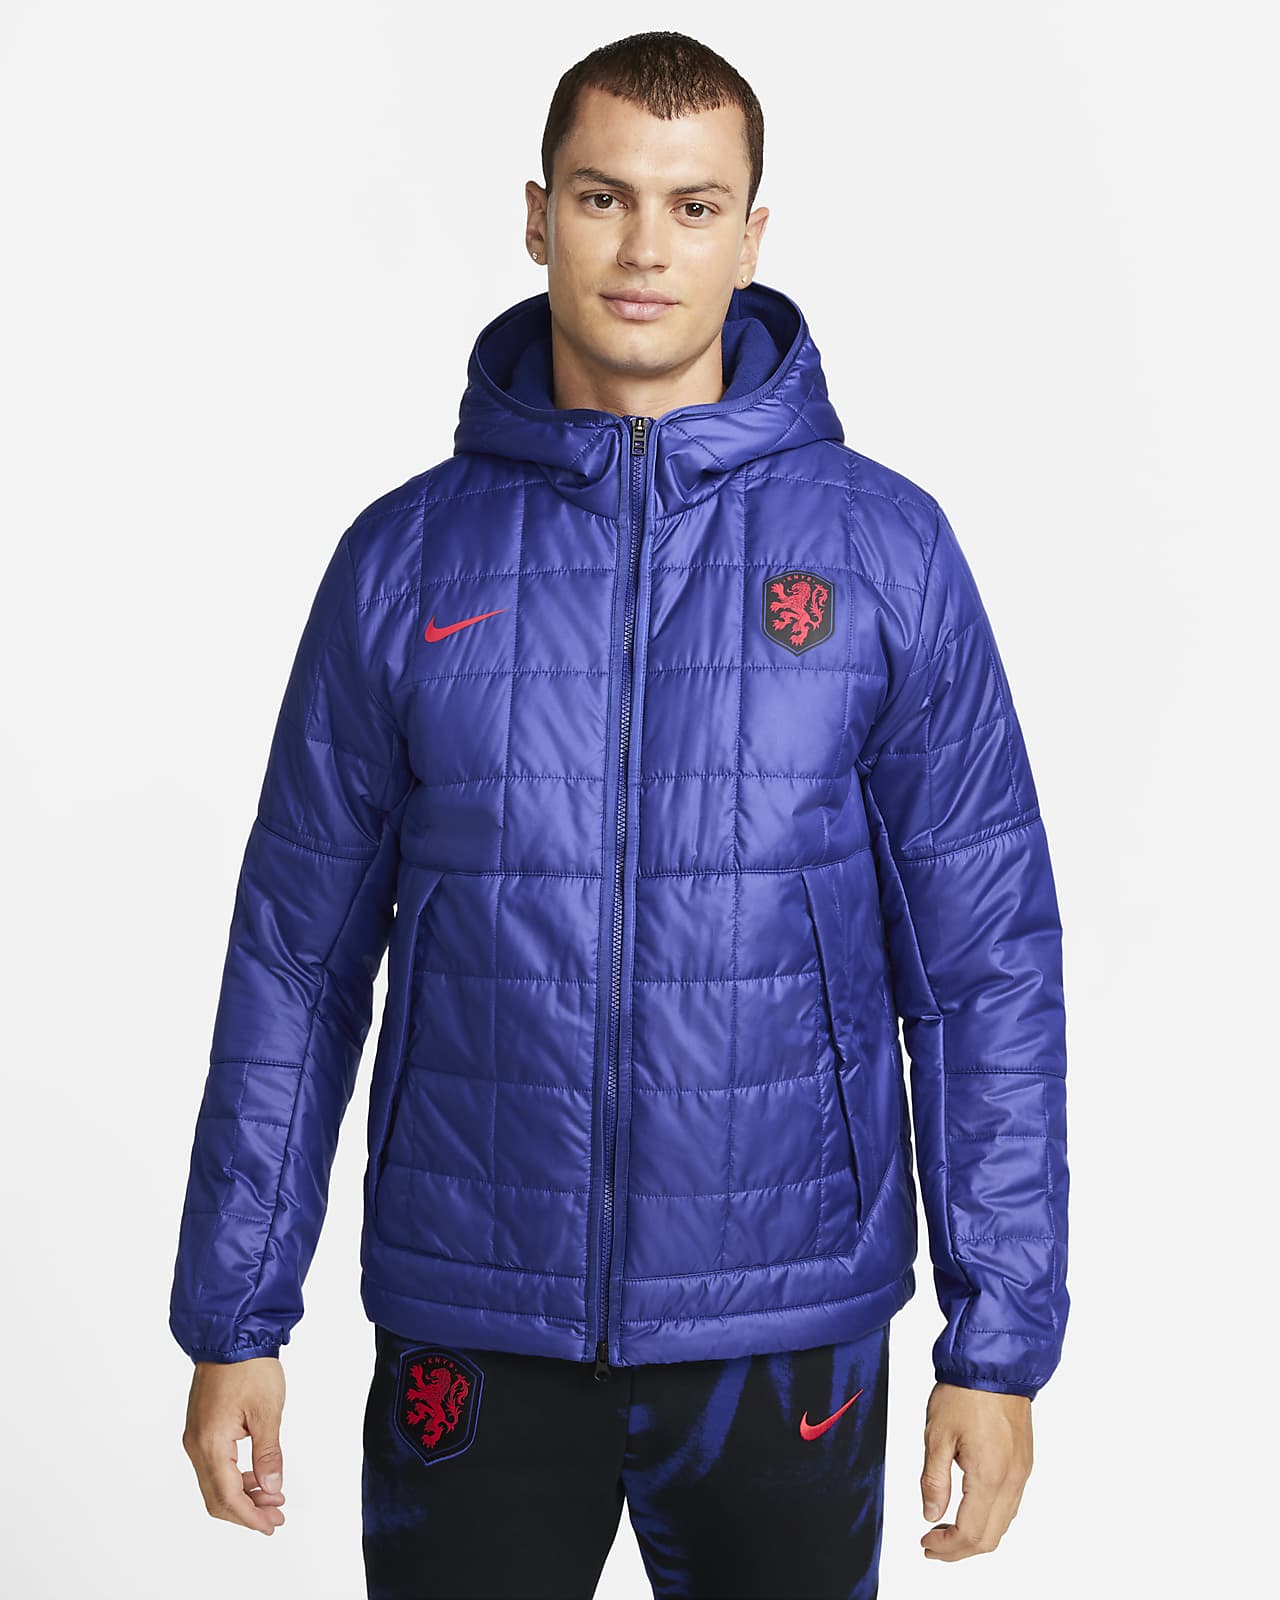 Netherlands Men's Nike Fleece-Lined Jacket. Nike